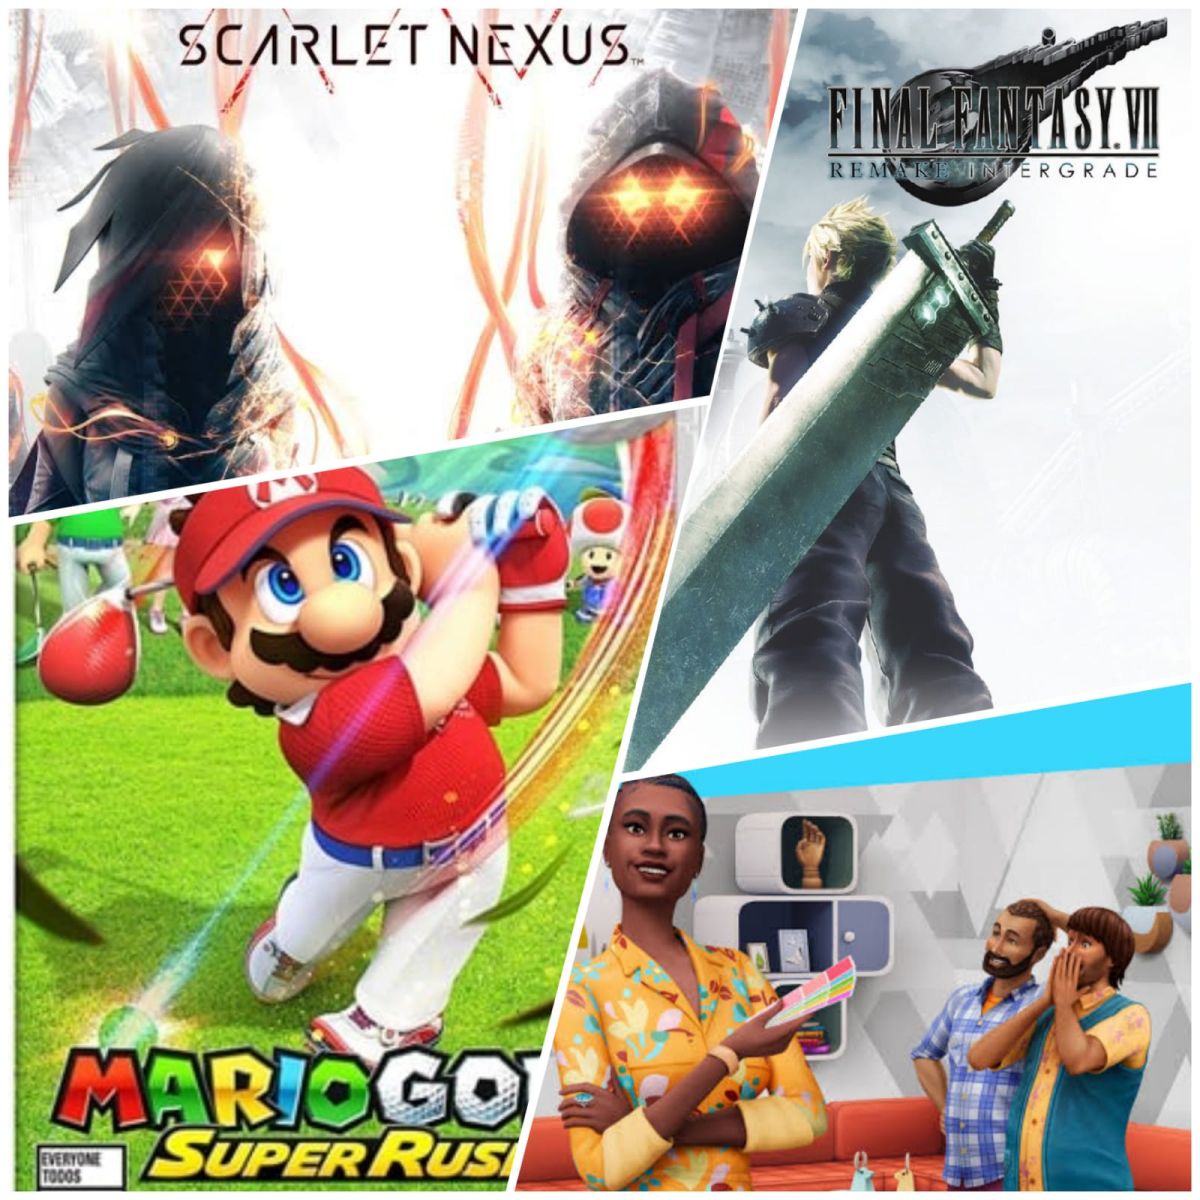 Review: Mario Golf Super Rush, Final Fantasy VII Remake Intergrade, Scarlet Nexus and The Sims 4 Interior Design